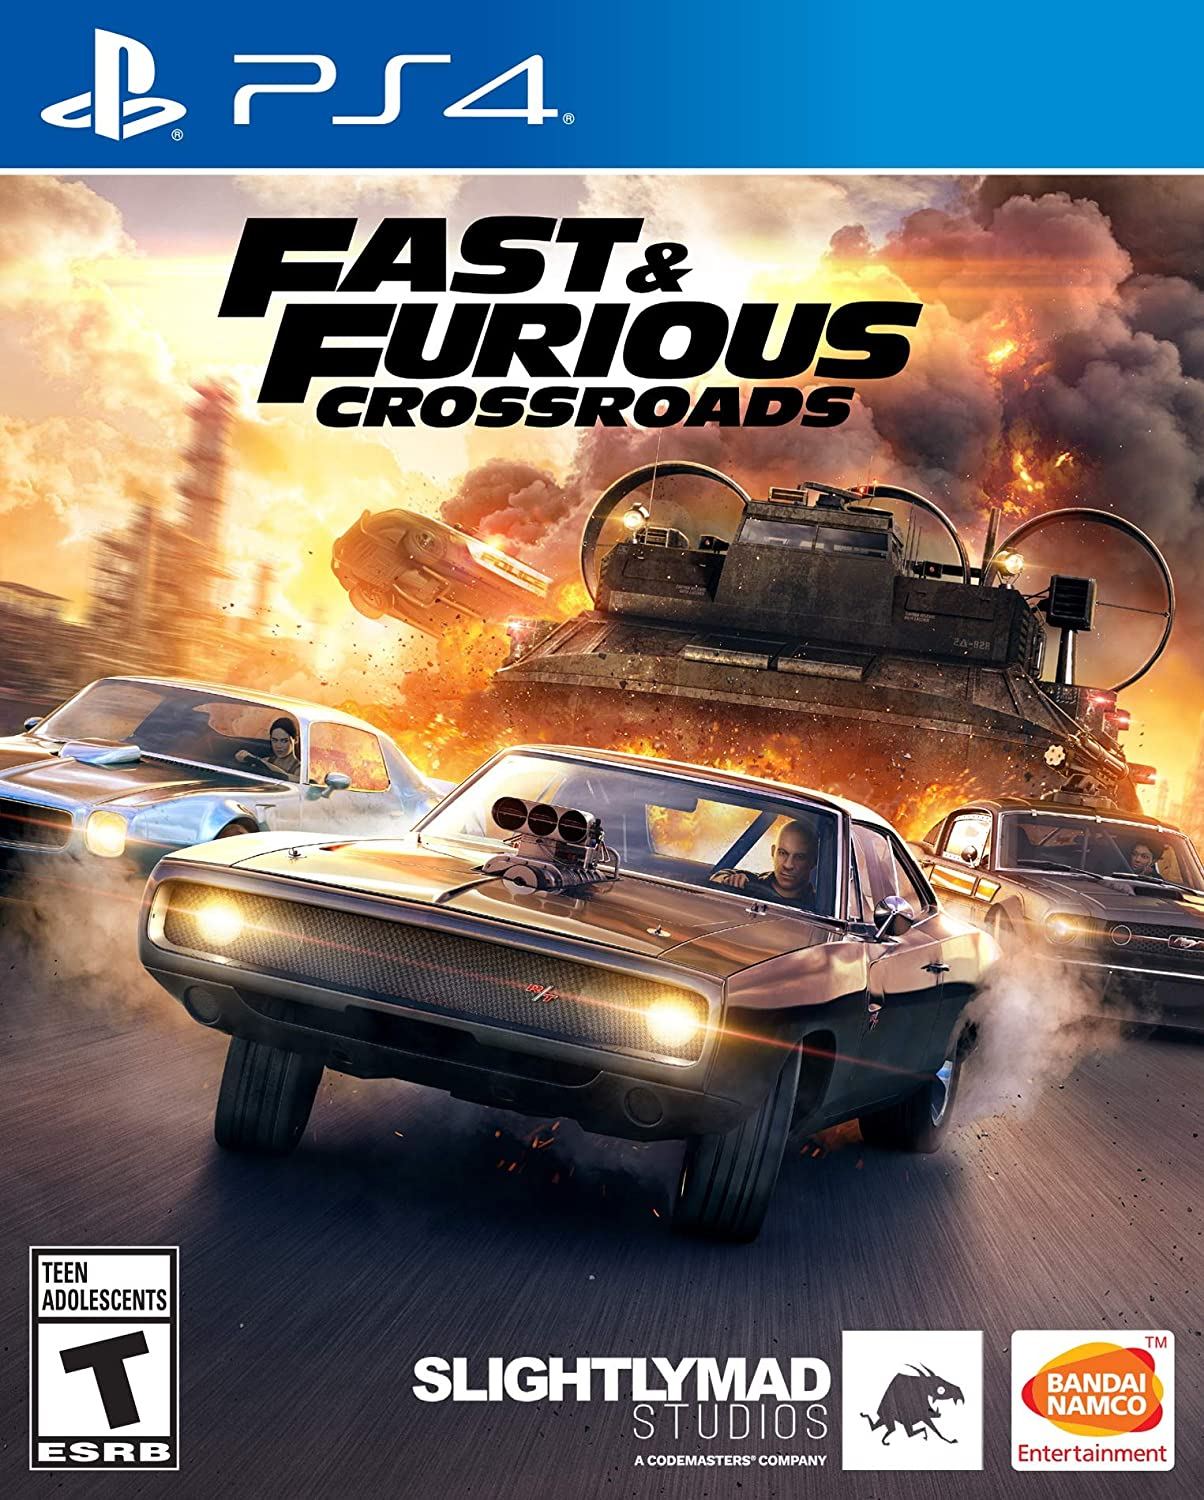 FAST & FURIOUS CROSSROADS Gameplay Trailer (2020) Video Game HD 